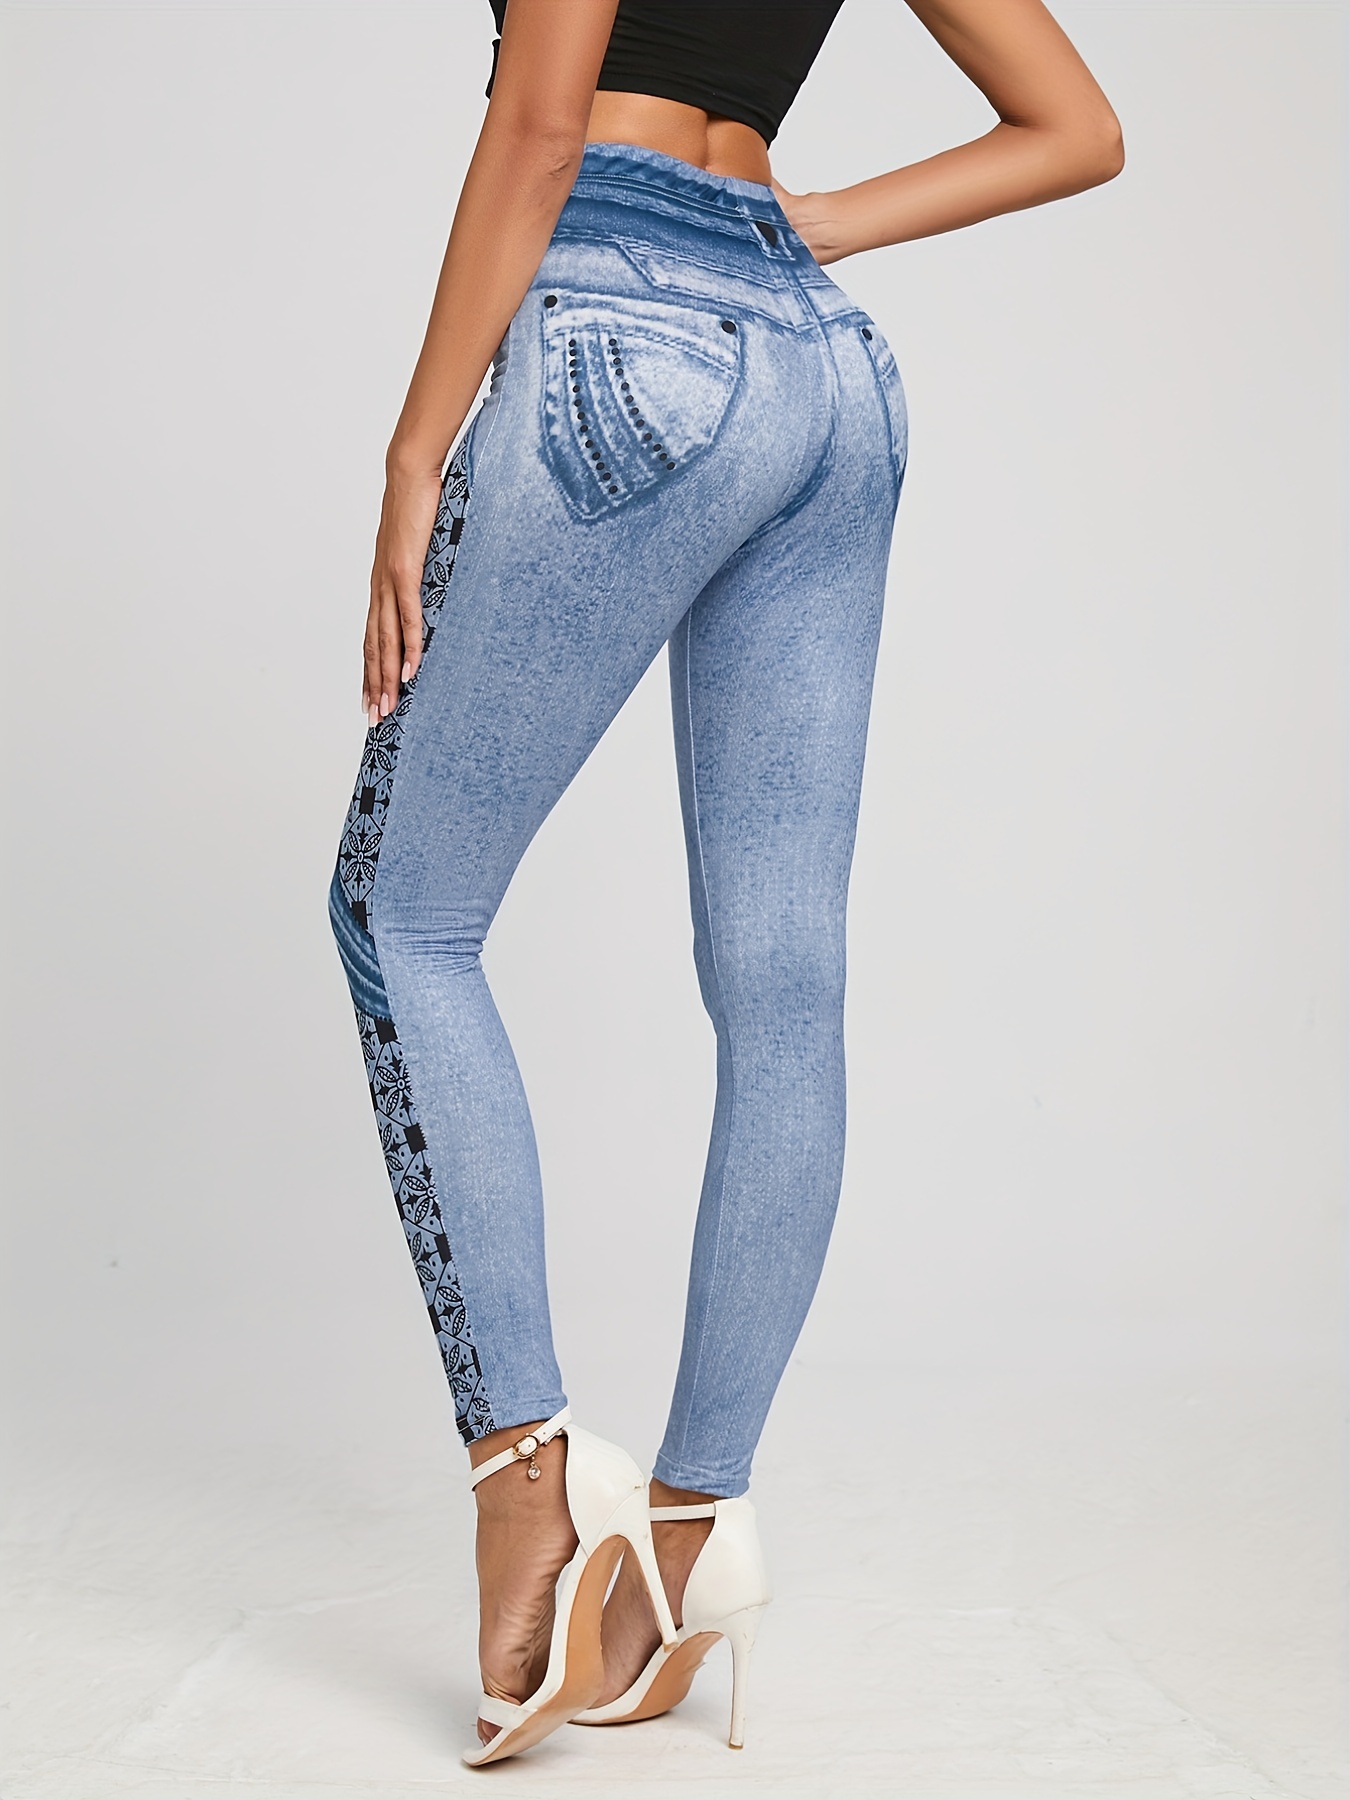 RQYYD Women's Imitation Jeans Leggings High Waist Stretchy